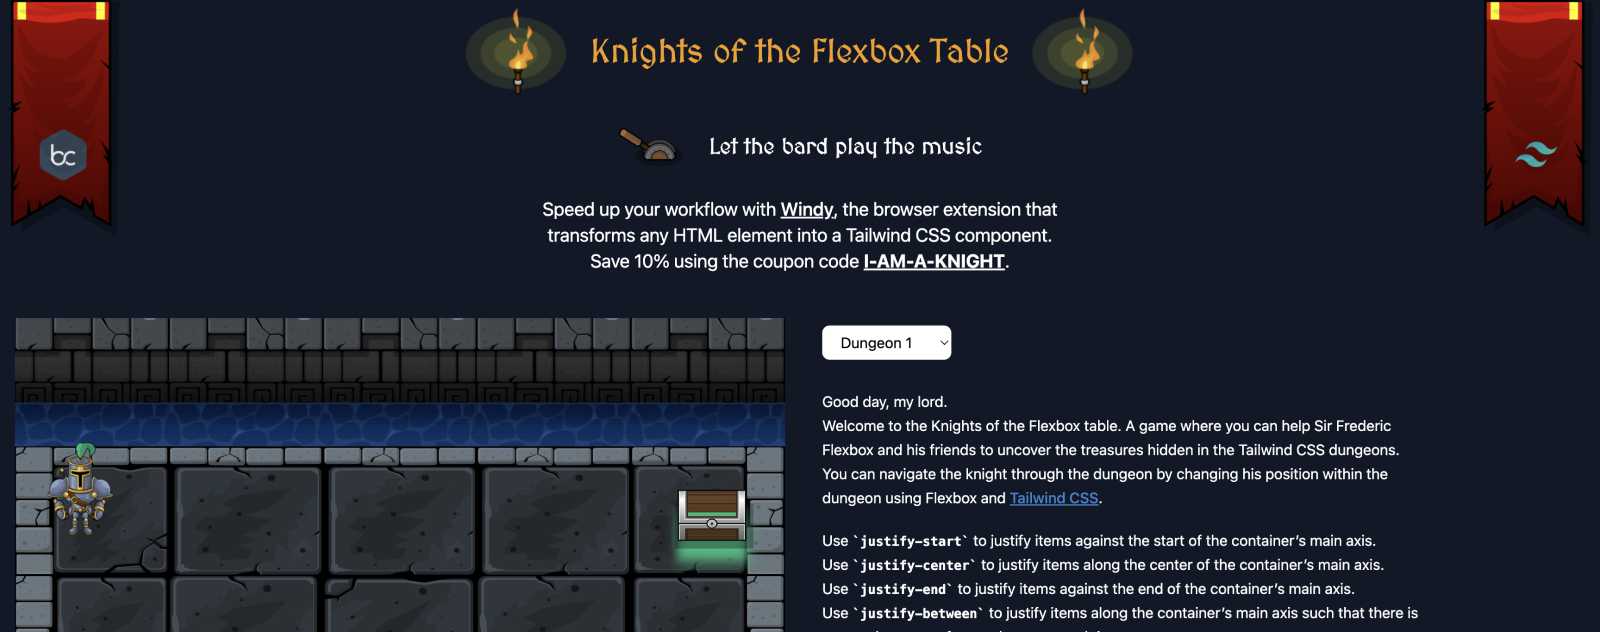 Knights of the Flexbox Table jeu pour apprendre le CSS